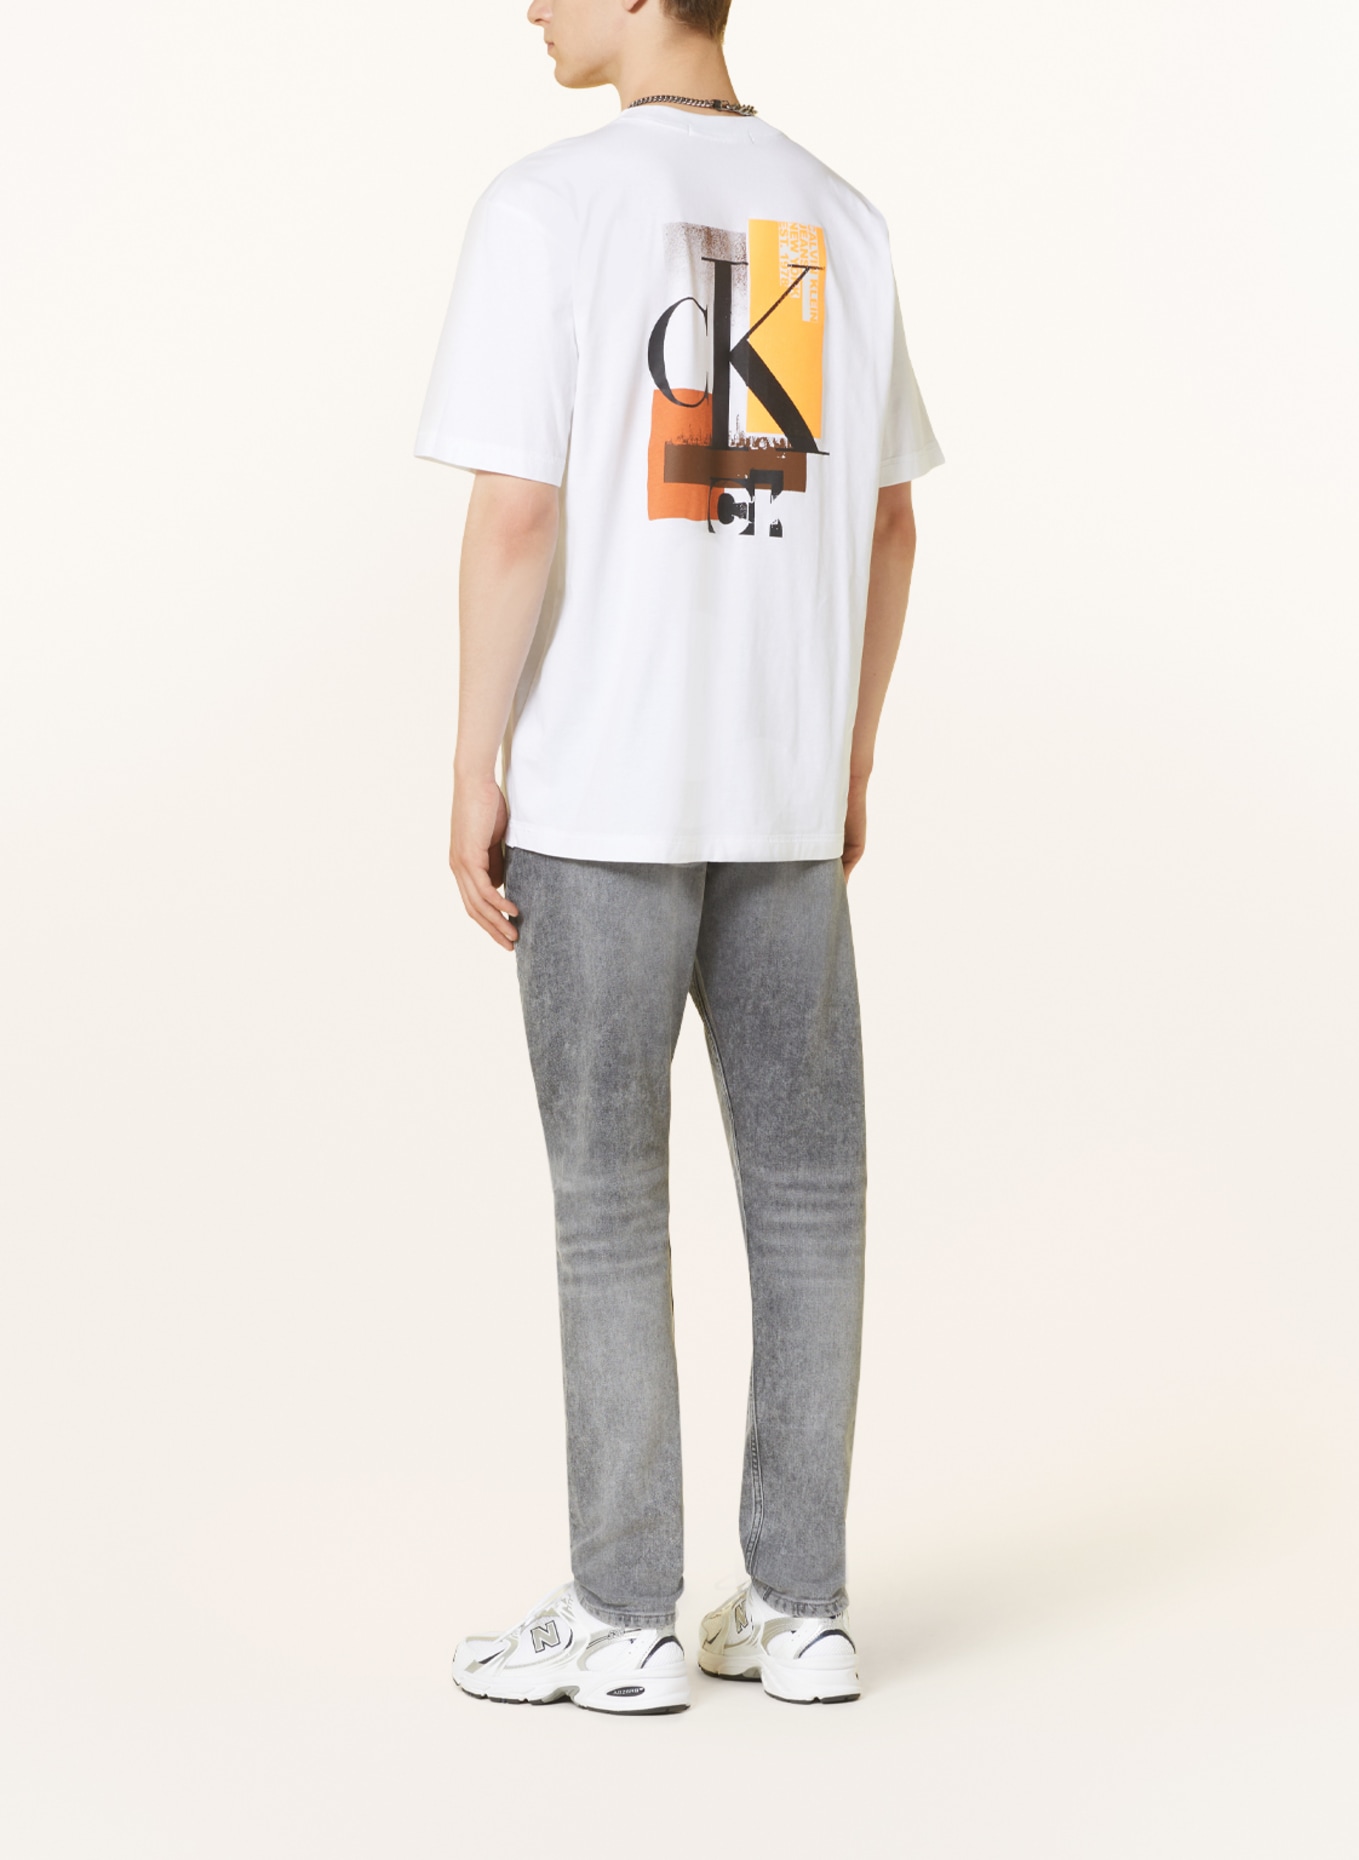 Calvin Klein Jeans T-Shirt in weiss